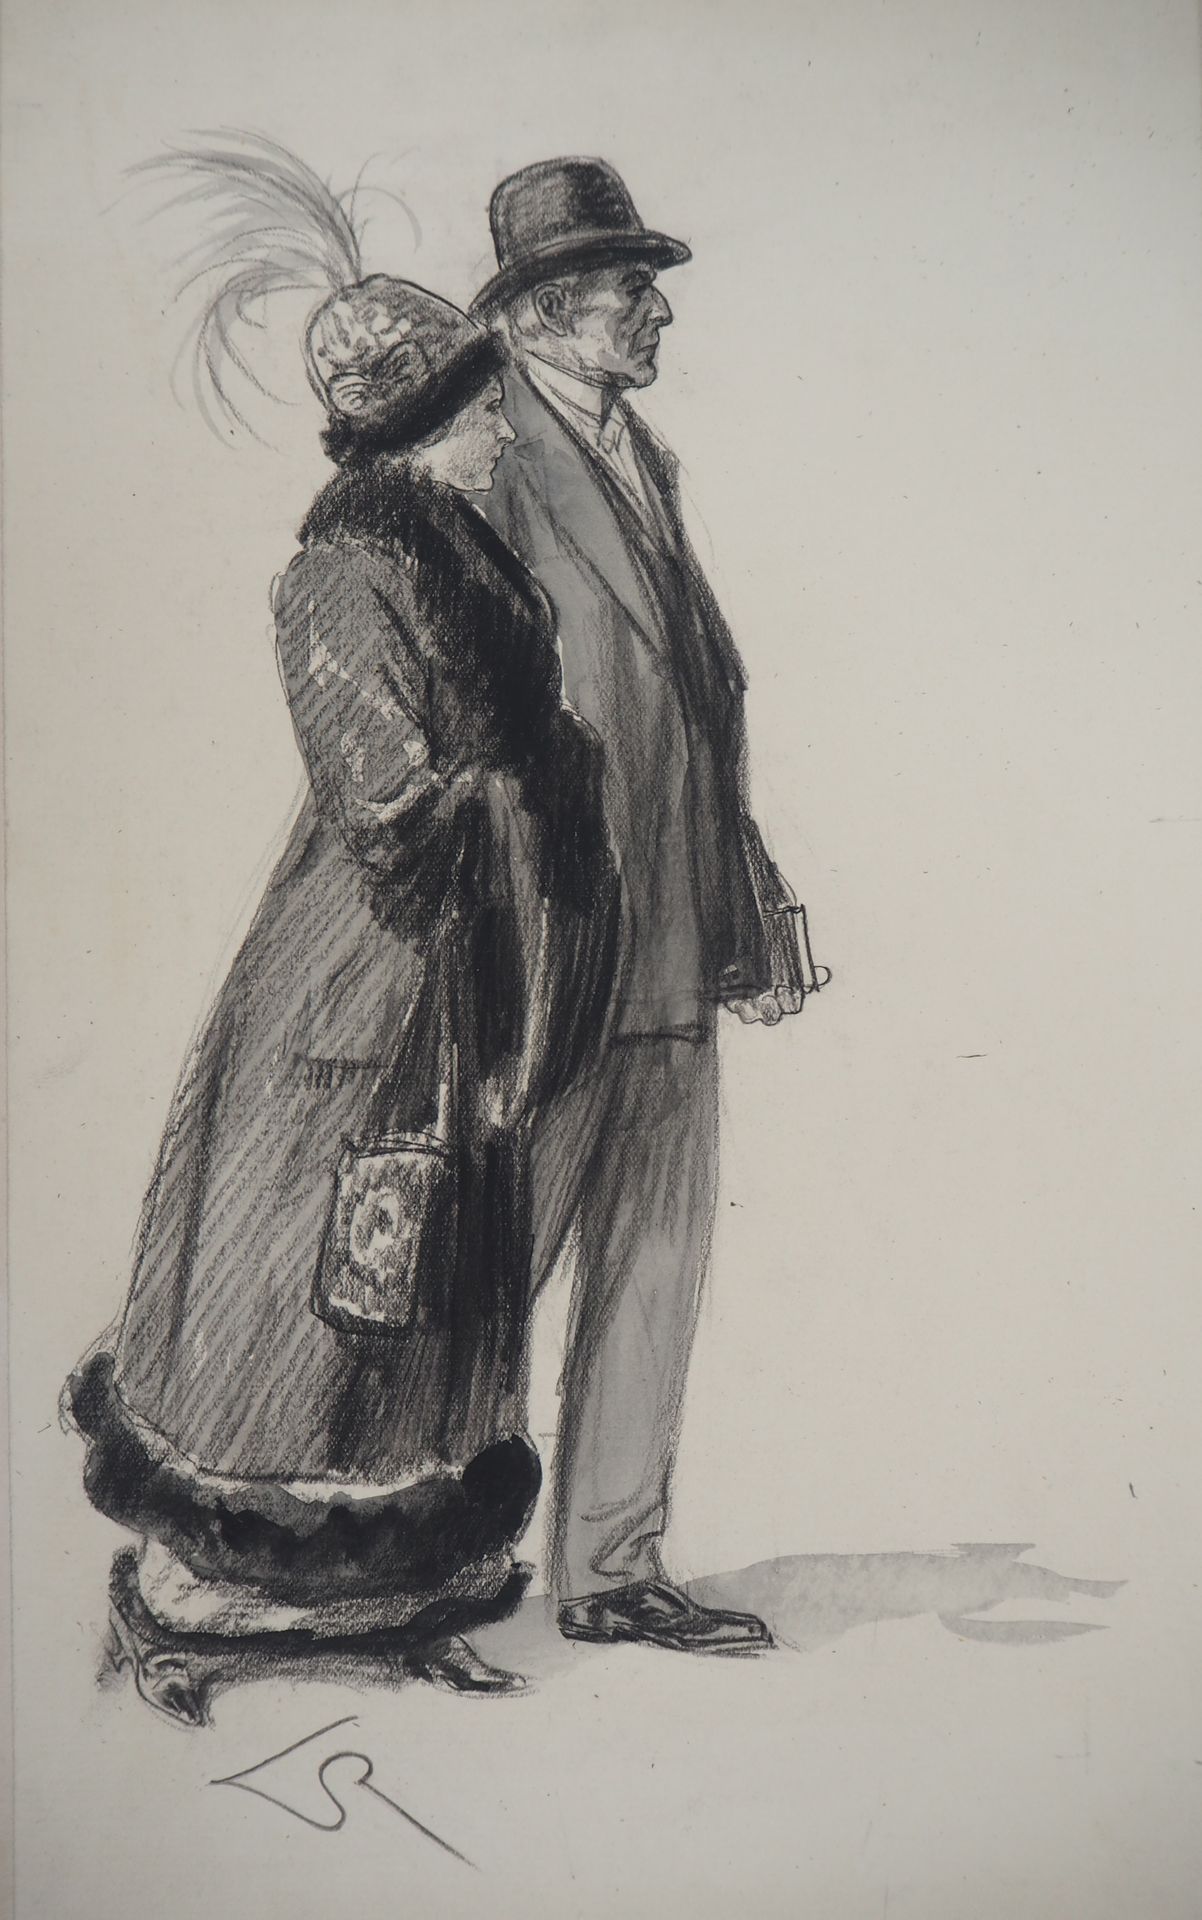 Almery LOBEL-RICHE Alméry LOBEL-RICHE (1880-1950)

Couple élégant, c. 1920

 

 &hellip;